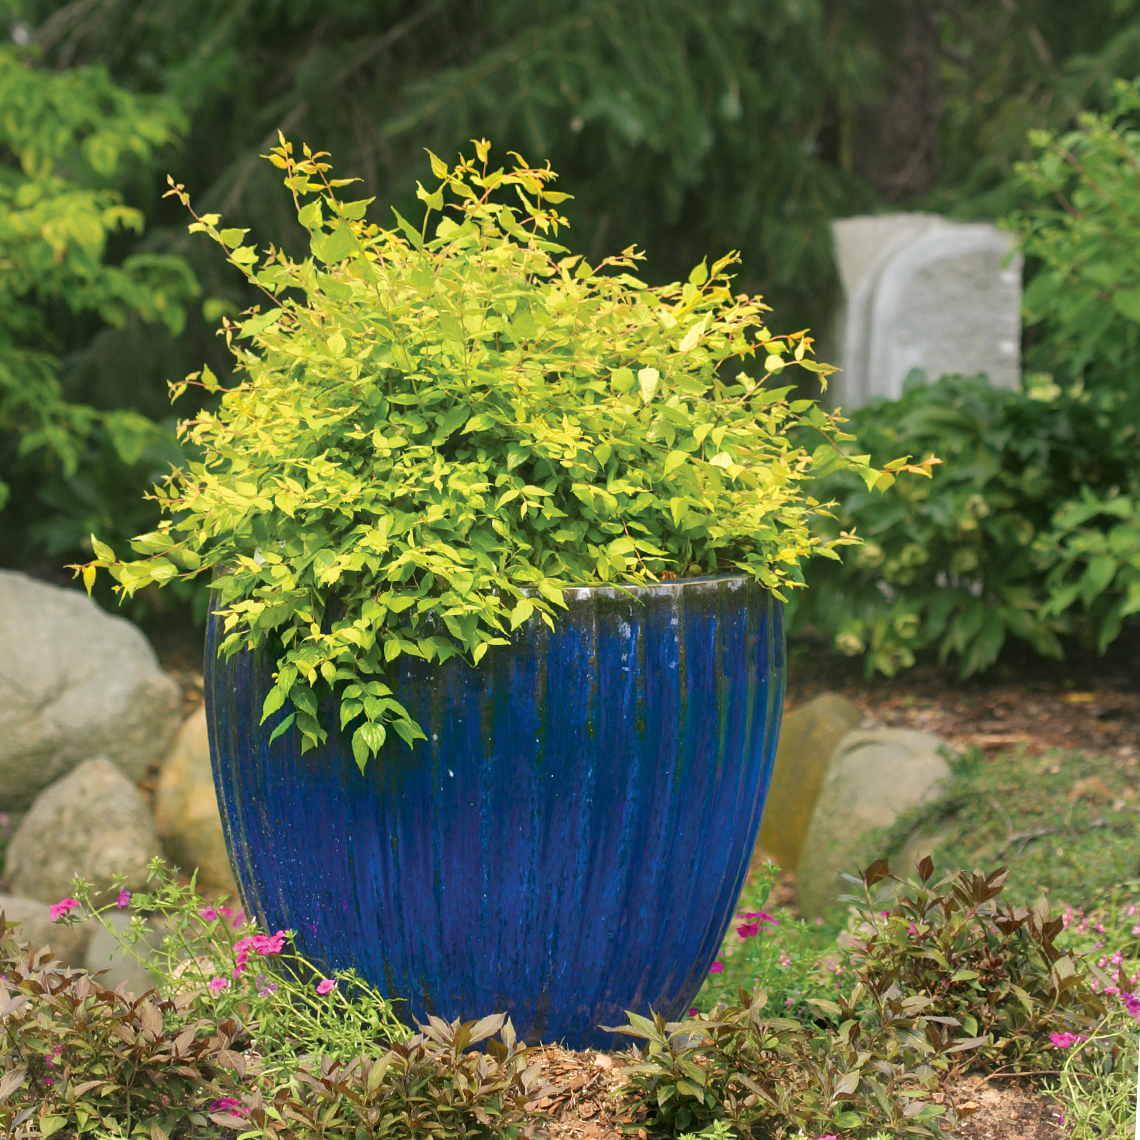 Small Dream Catcher Kolkwitzia in blue ceramic container in garden